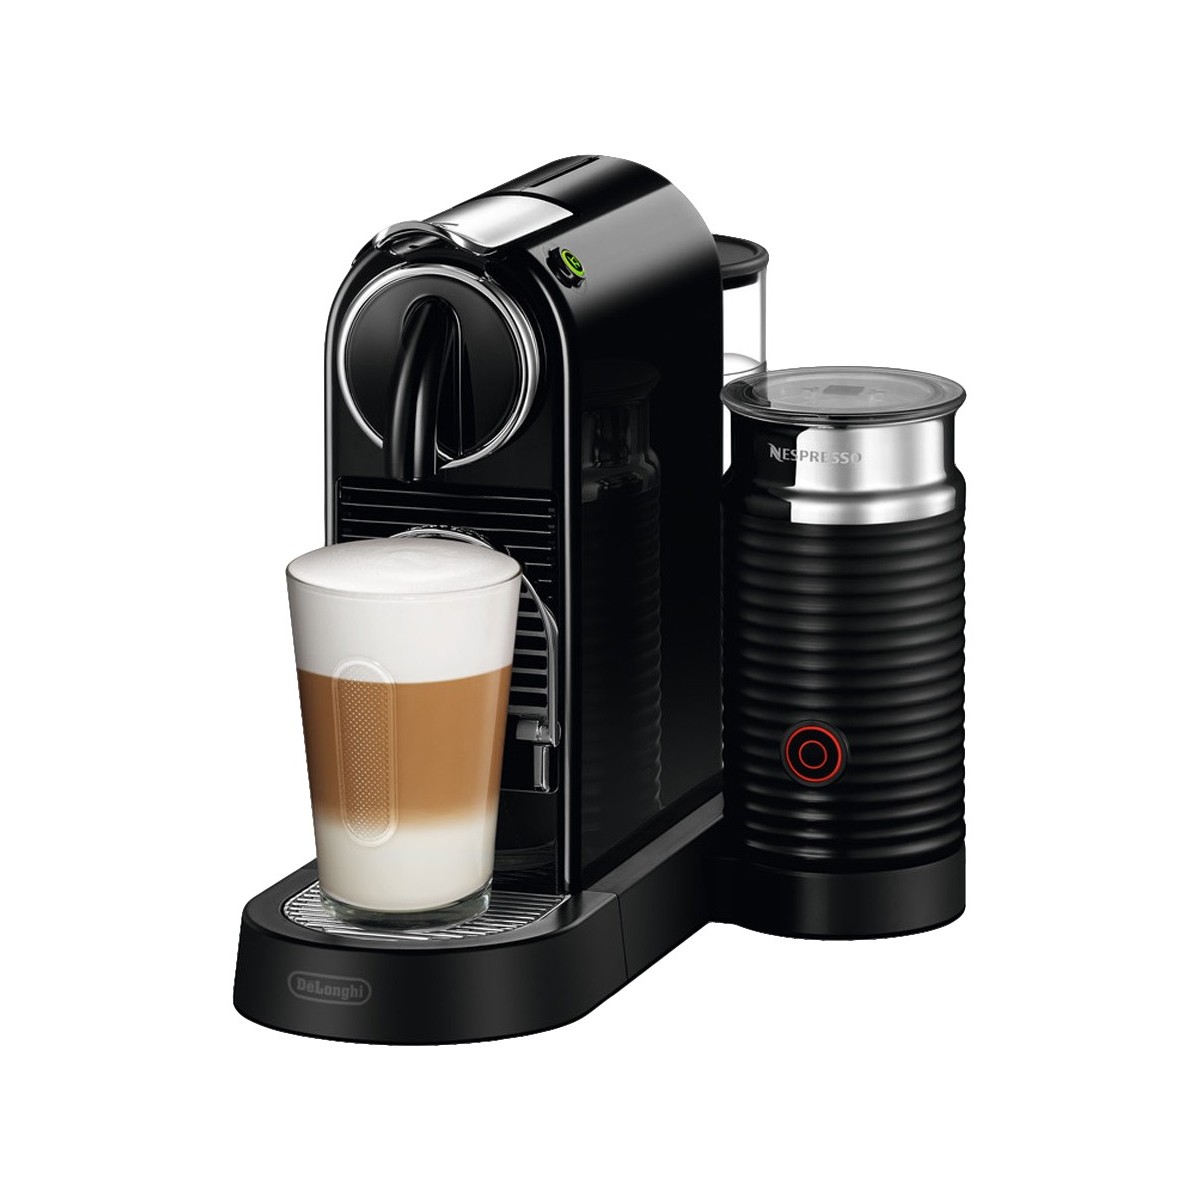 De Longhi Citiz - Drip coffee maker - 1 L - Coffee capsule - 1710 W - Black